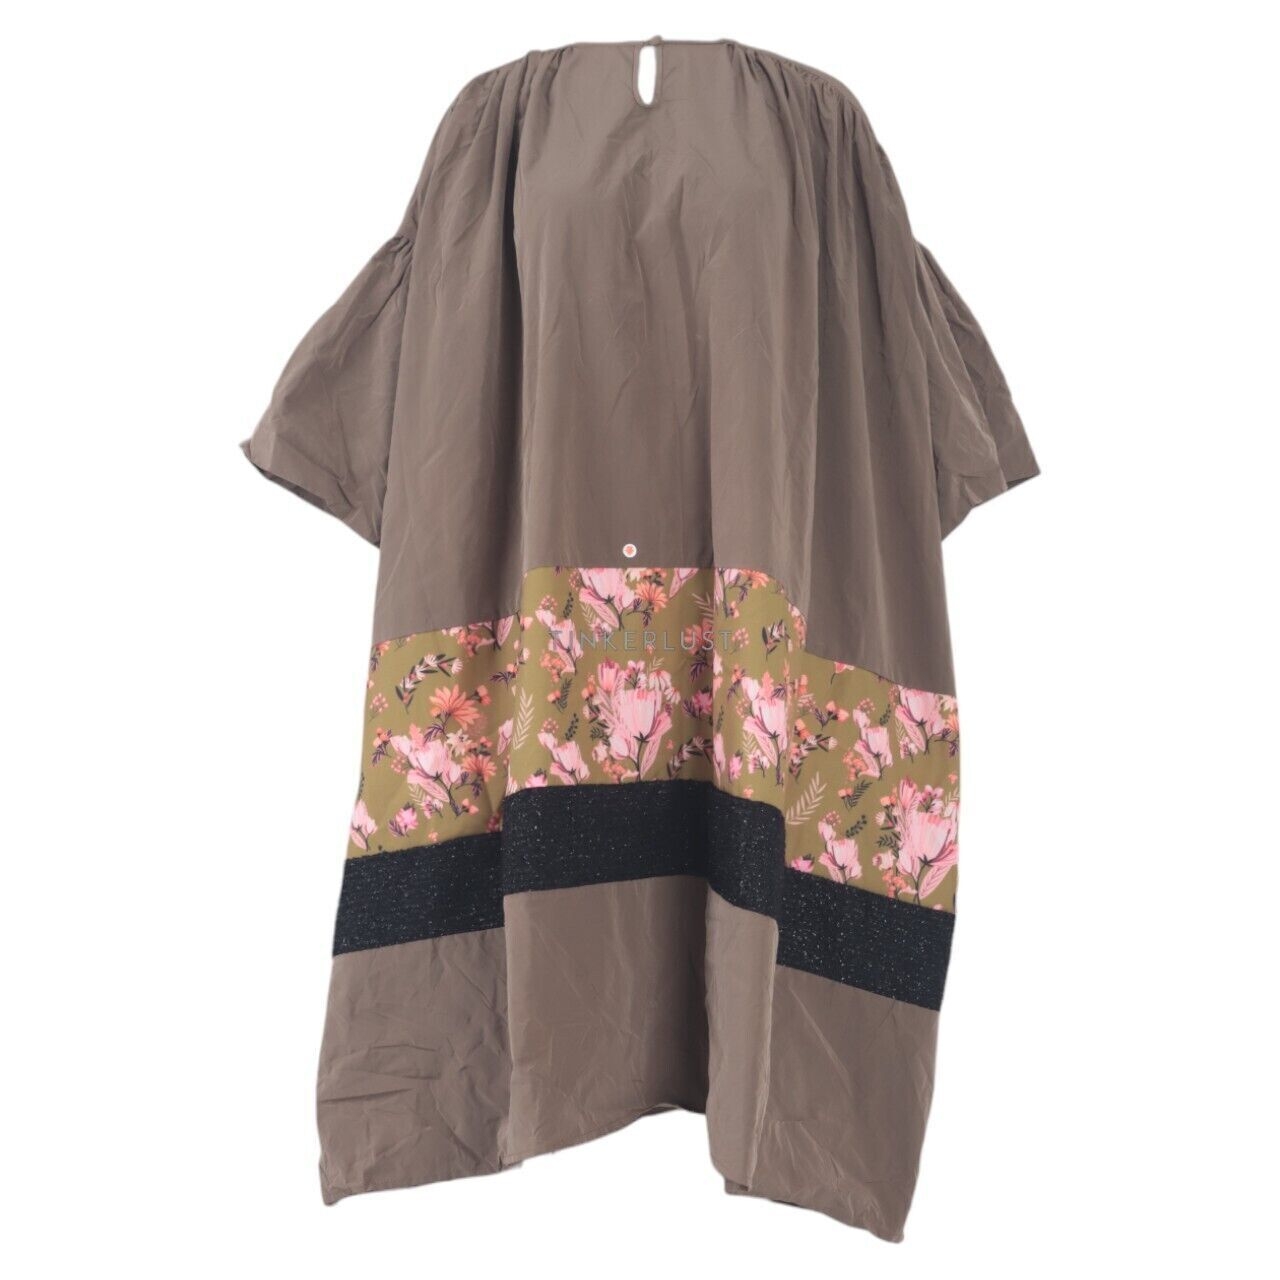 Tities Sapoetra Olive & Multicolour Floral Mini Dress